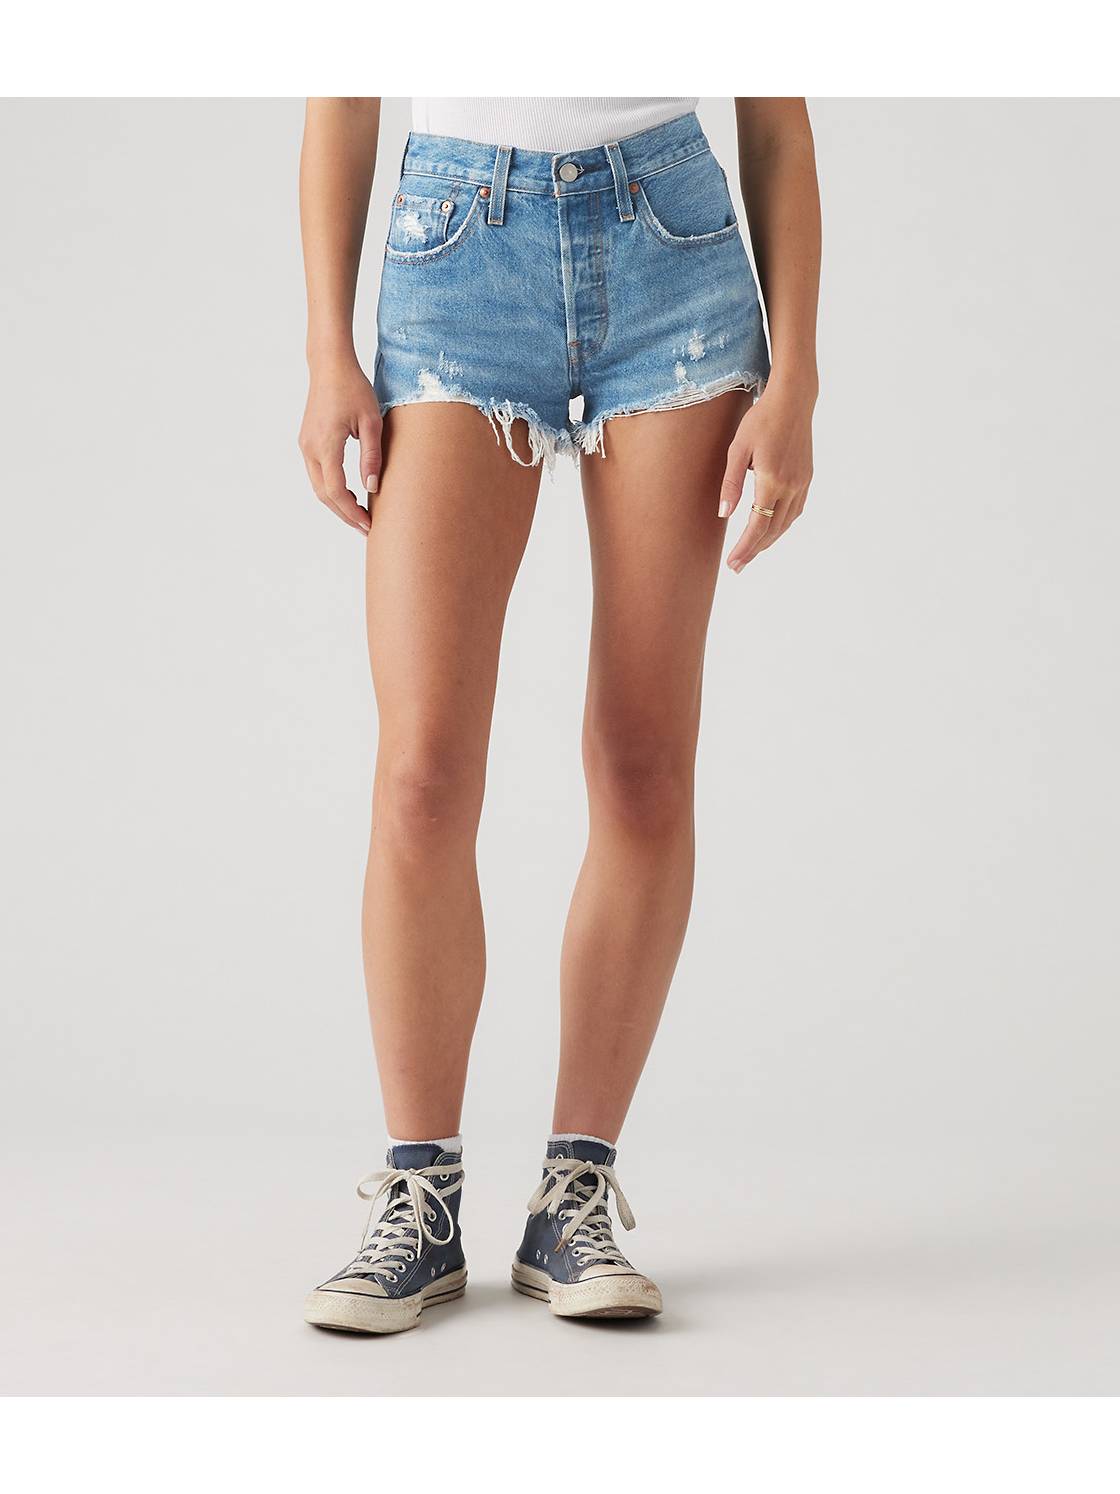 af ru jord Women's Distressed Jeans: Shop Ripped Jean Shorts & Pants | Levi's® US